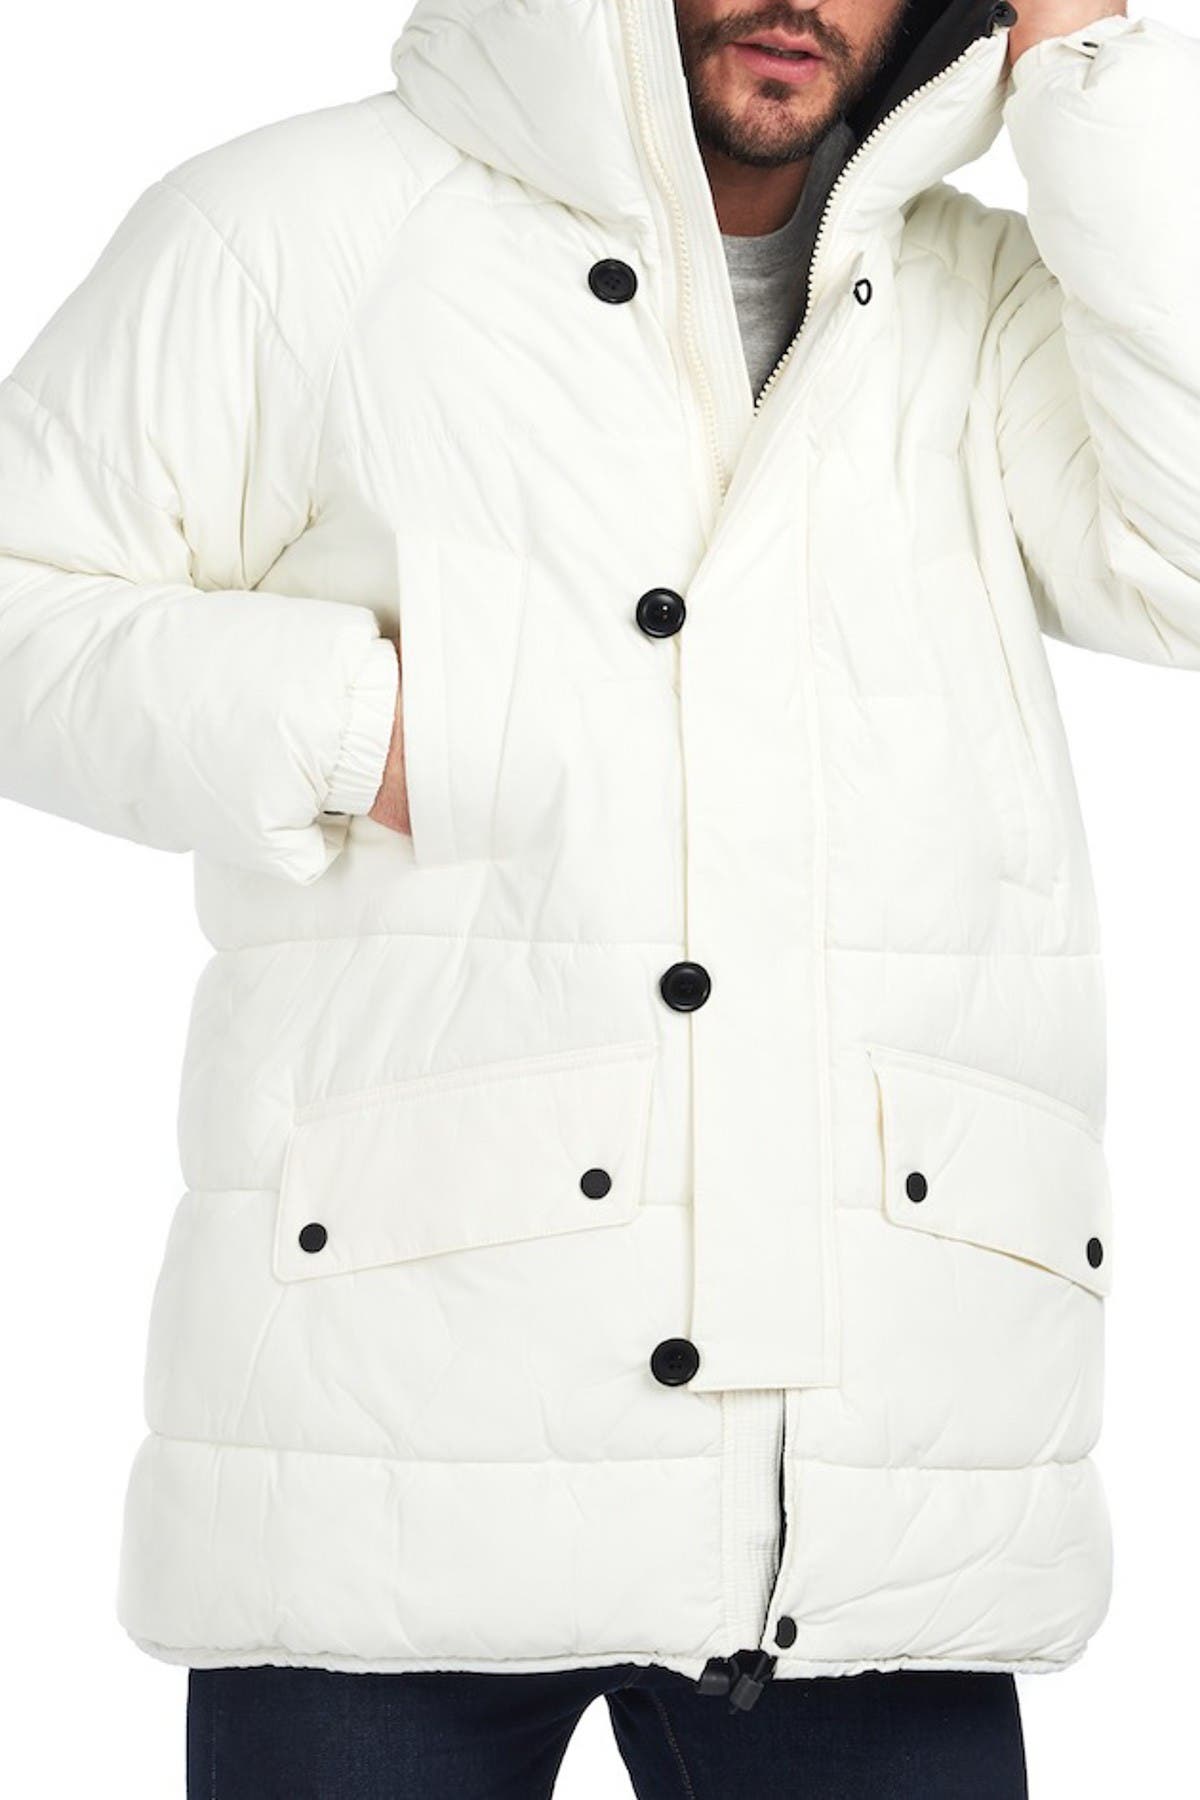 barbour alpine quilted jacket